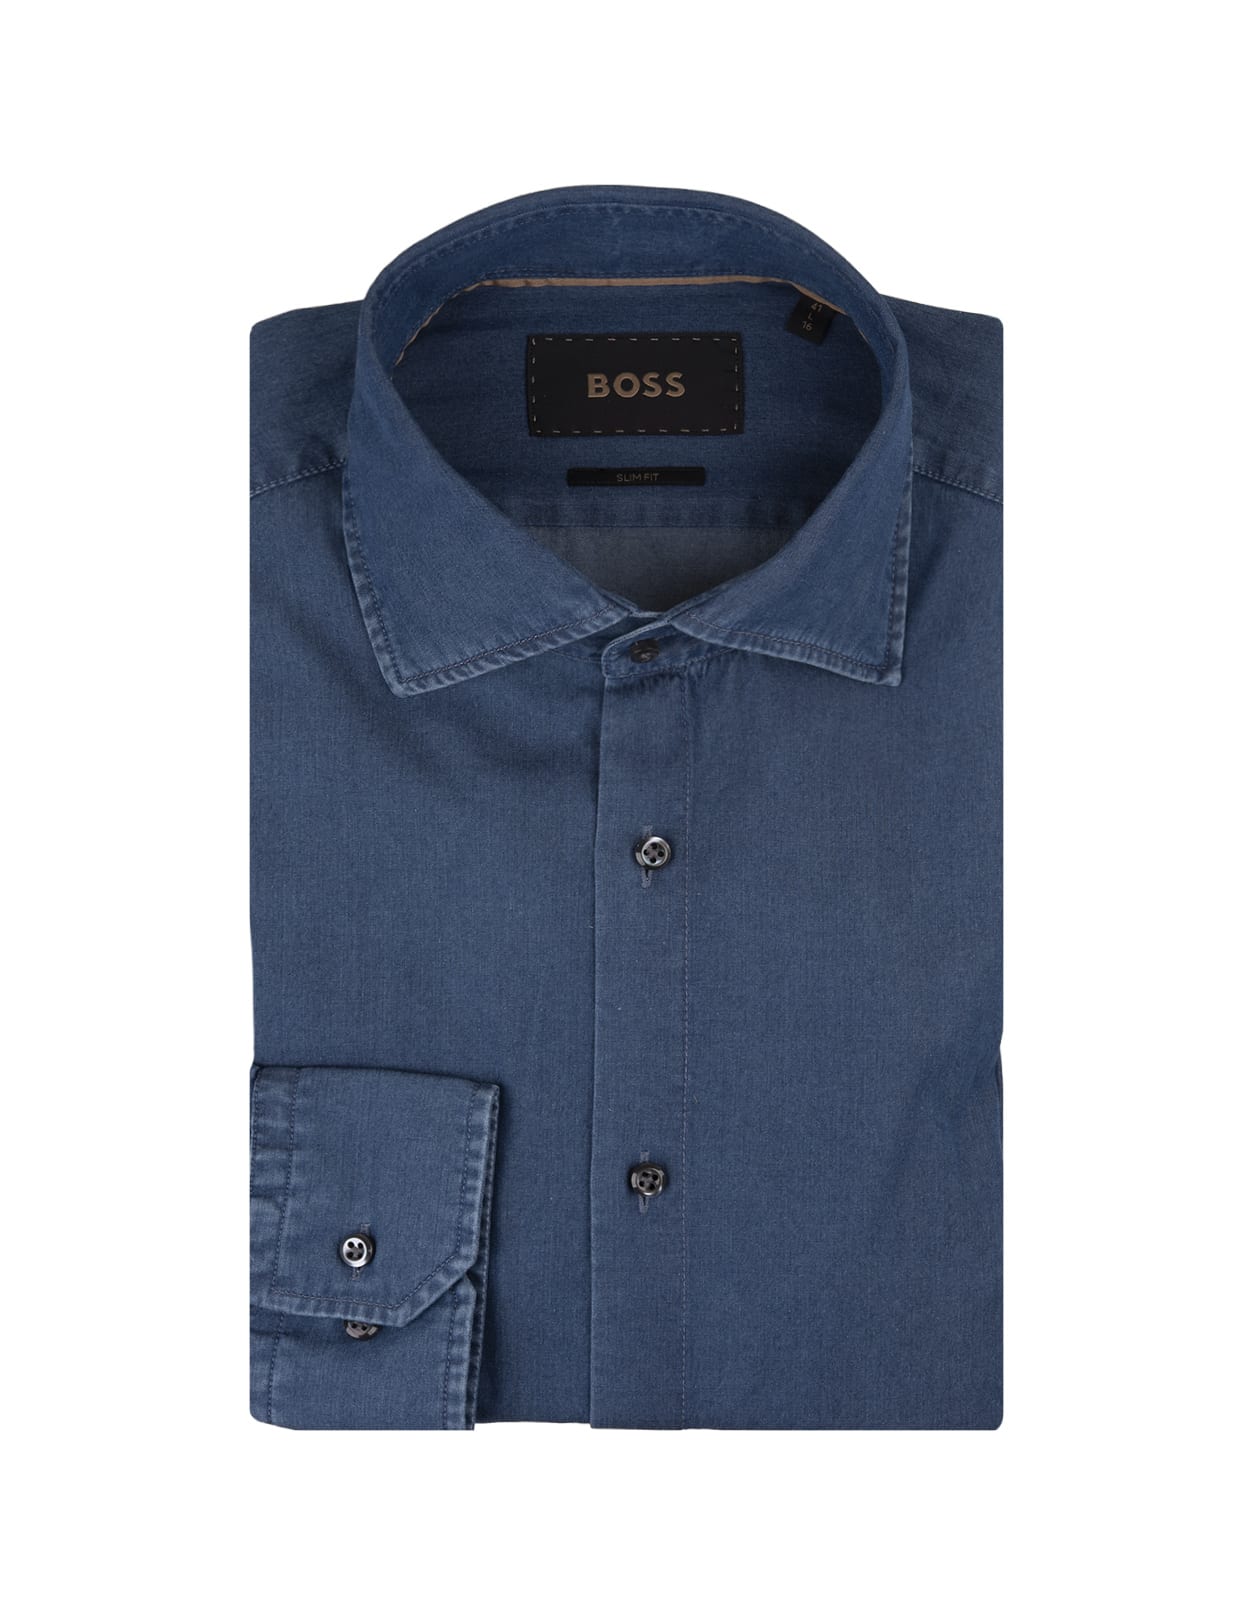 Hugo Boss Slim Fit Shirt In Blue Cotton Denim